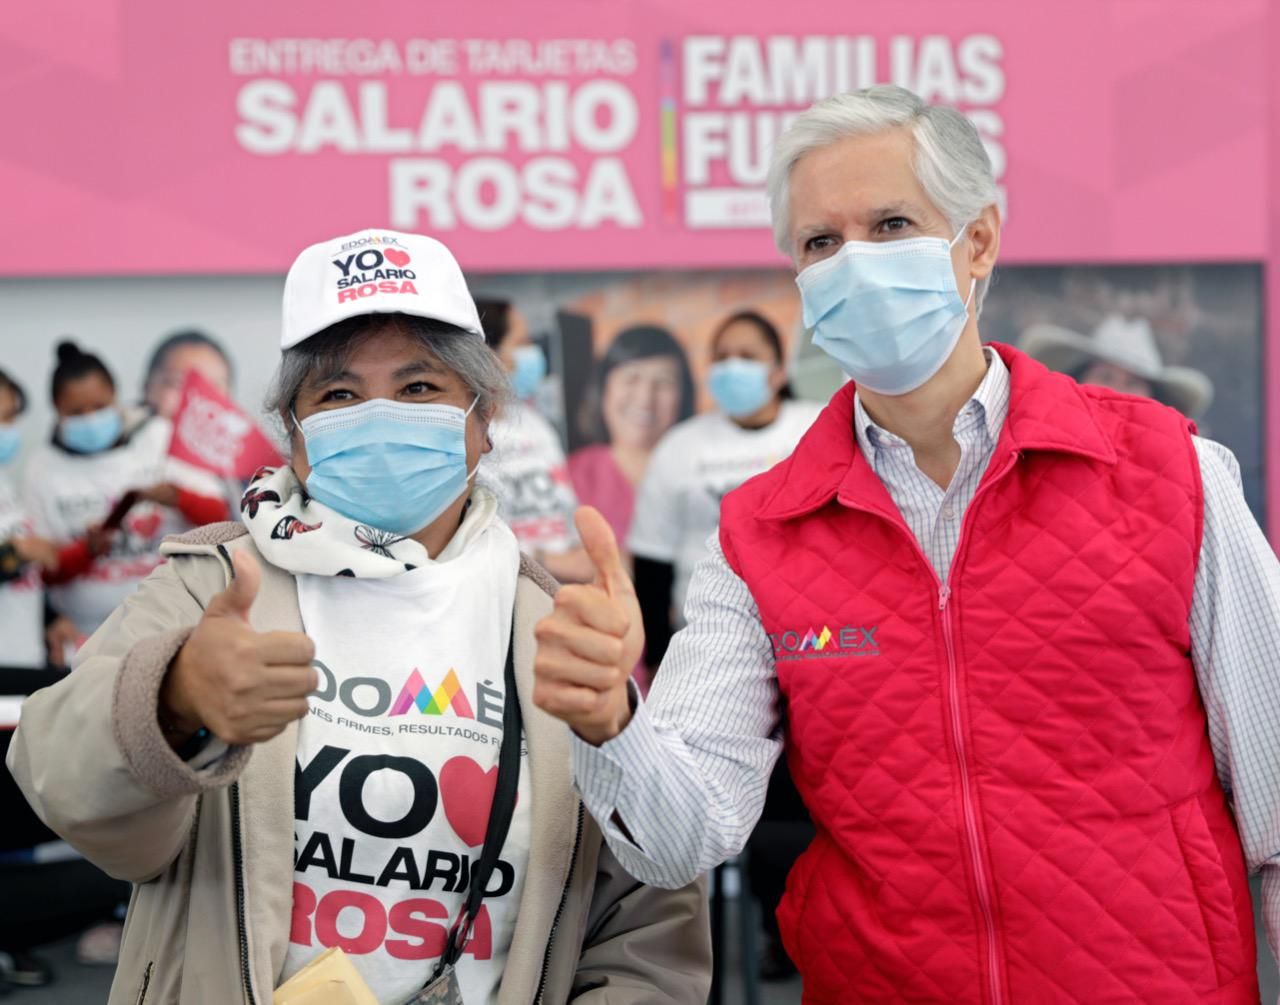 Durante pandemia por COVID-19, Salario Rosa apoya a las familias mexiquenses: Alfredo del Mazo